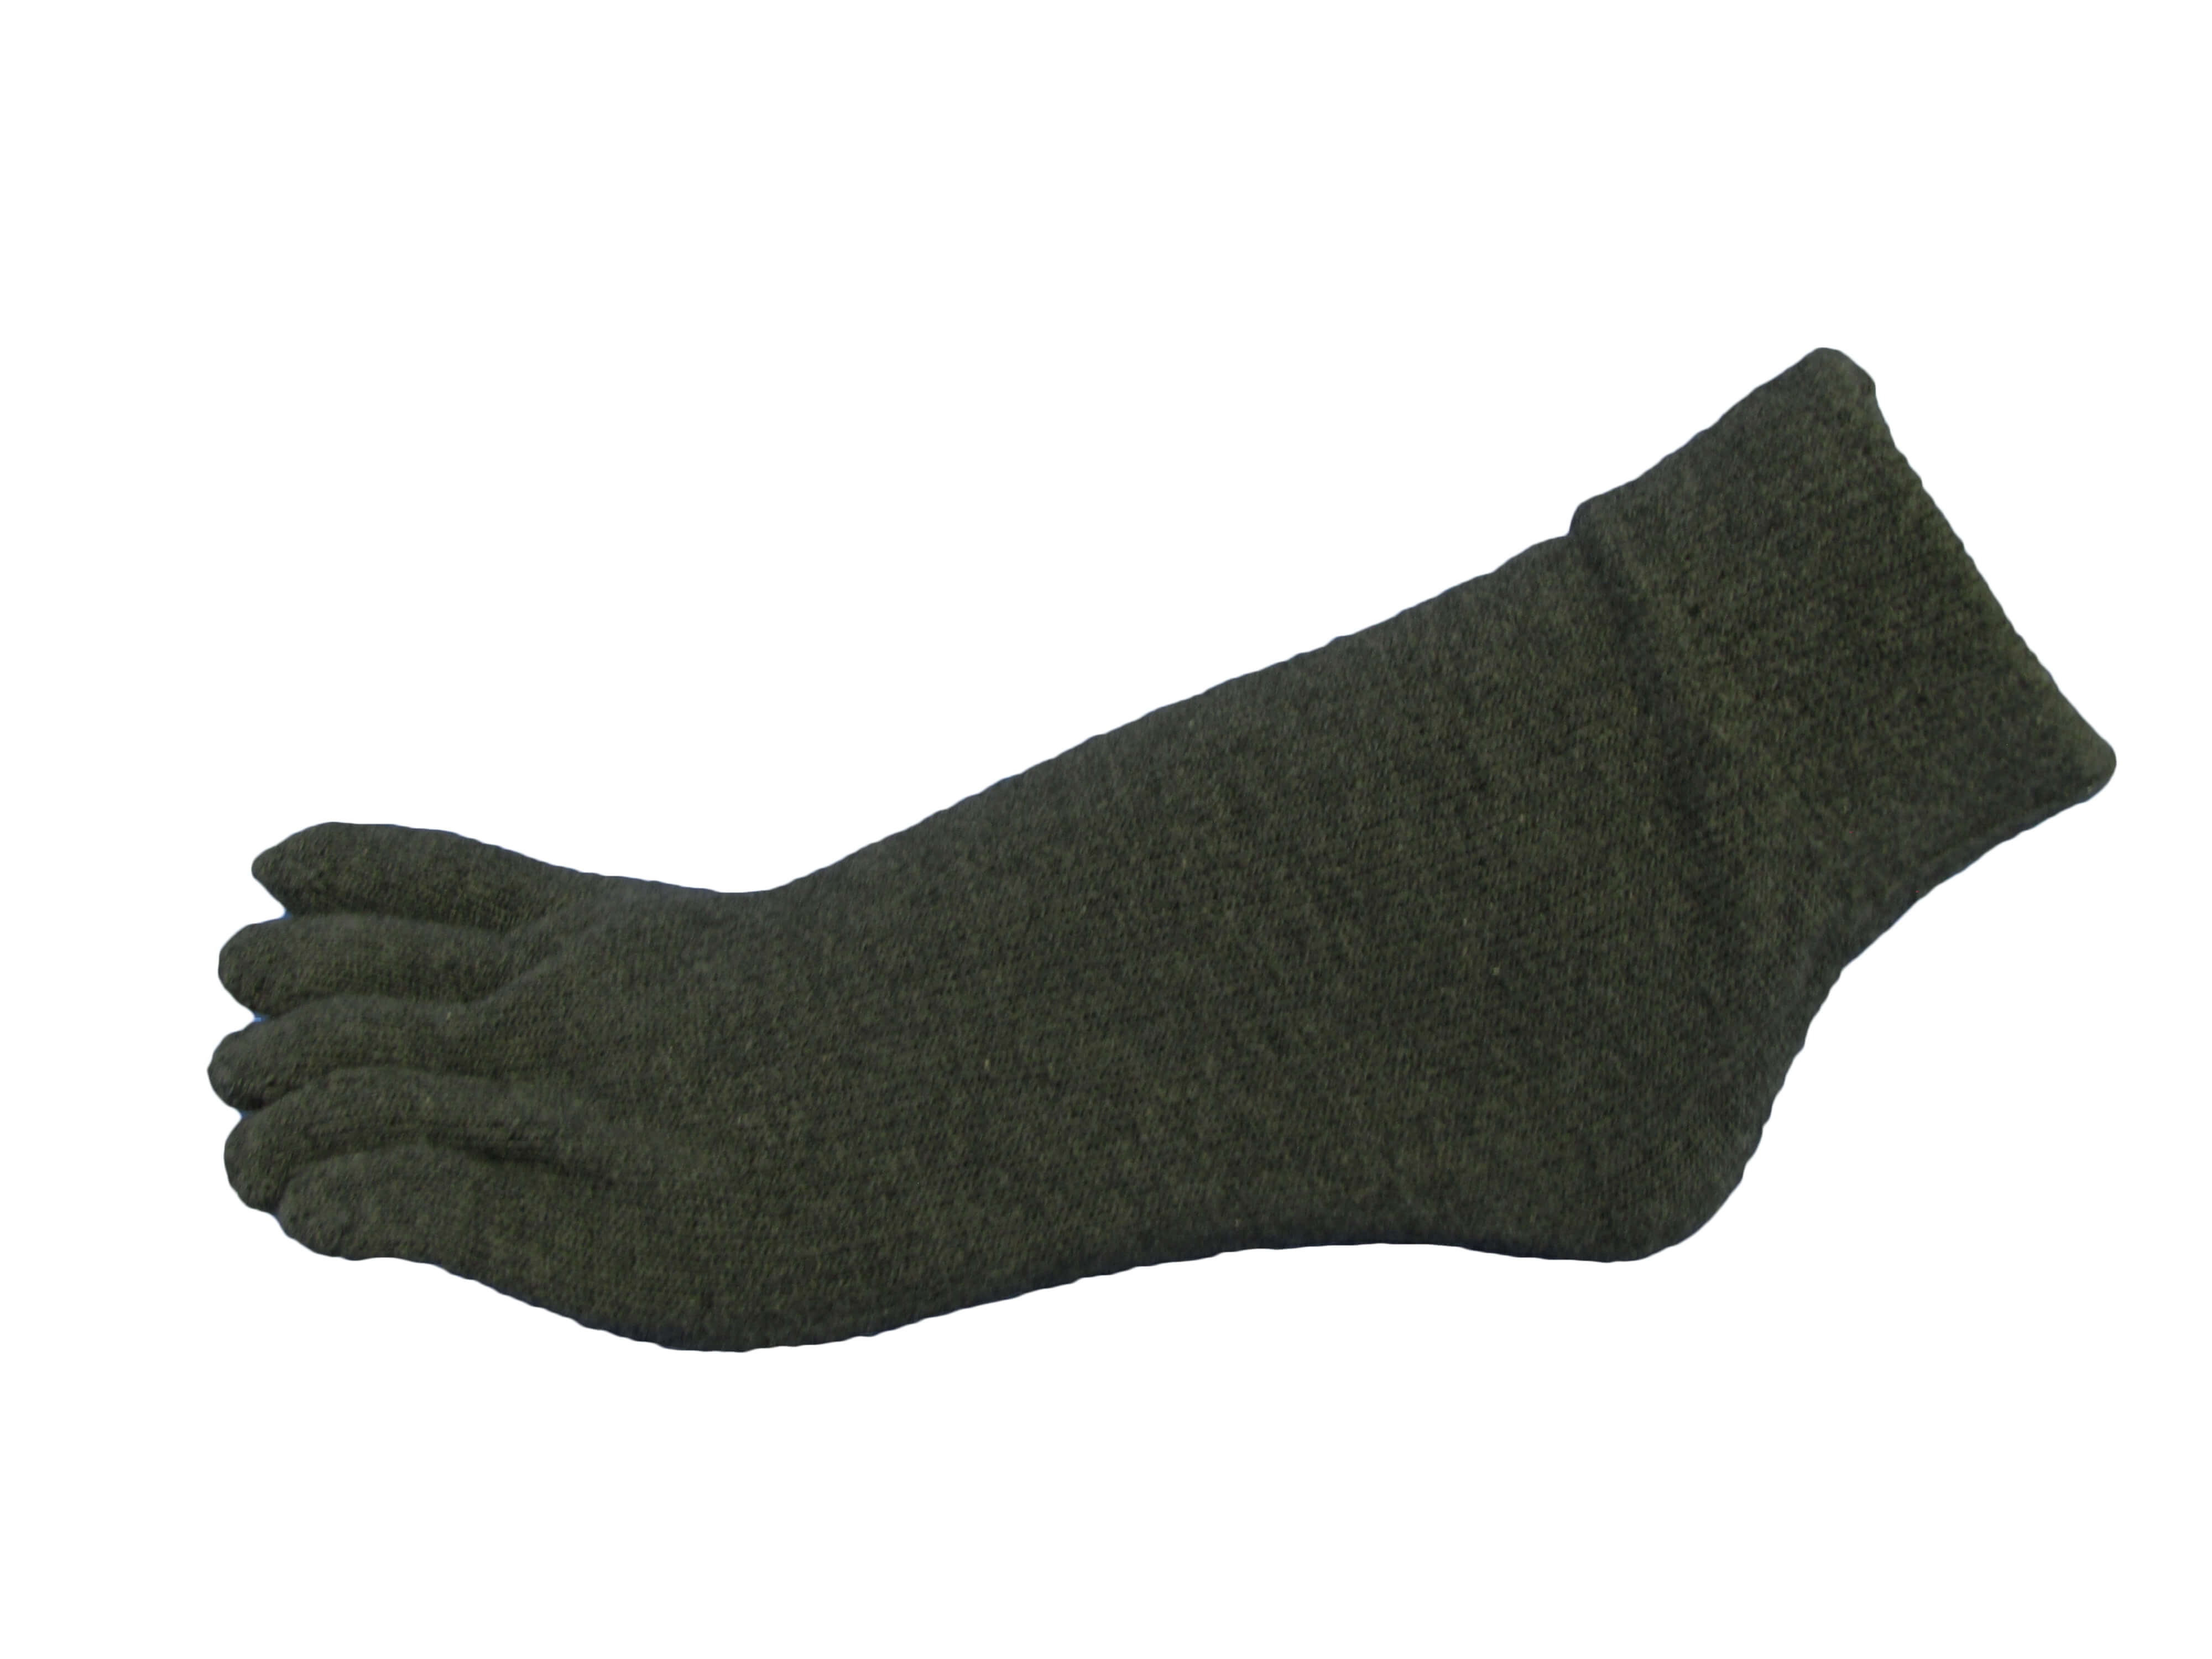 2 Pair Men's Thermal Socks Full Terrycloth Without Rubber Light Grey Dark 39 